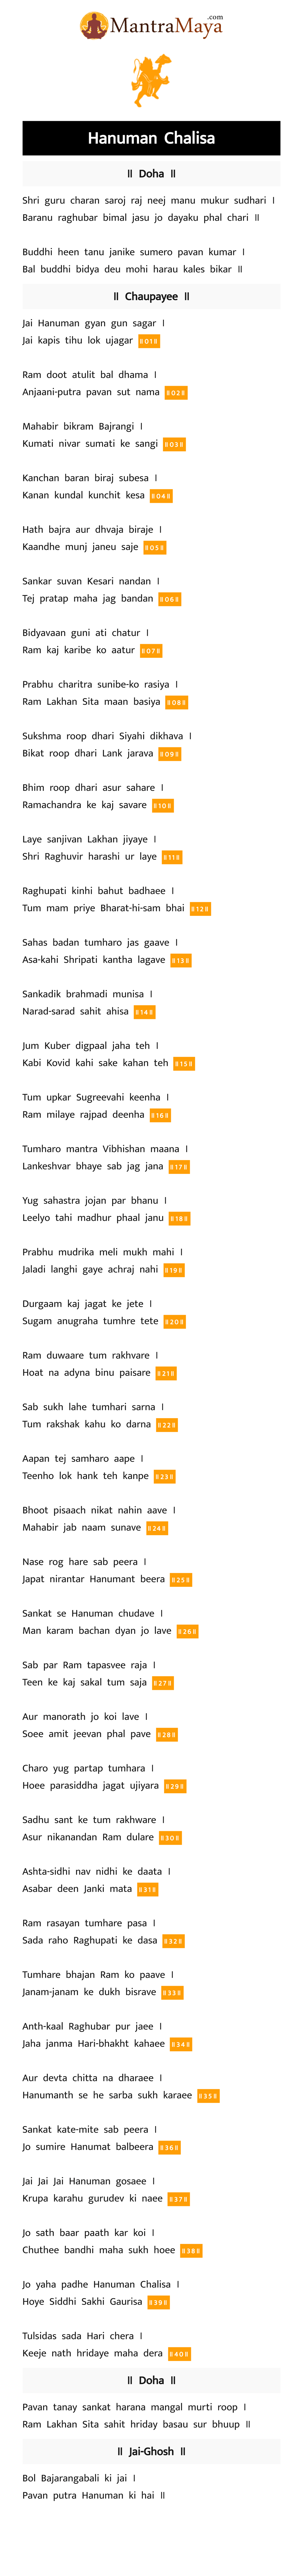 hanuman chalisa lyrics english meanings